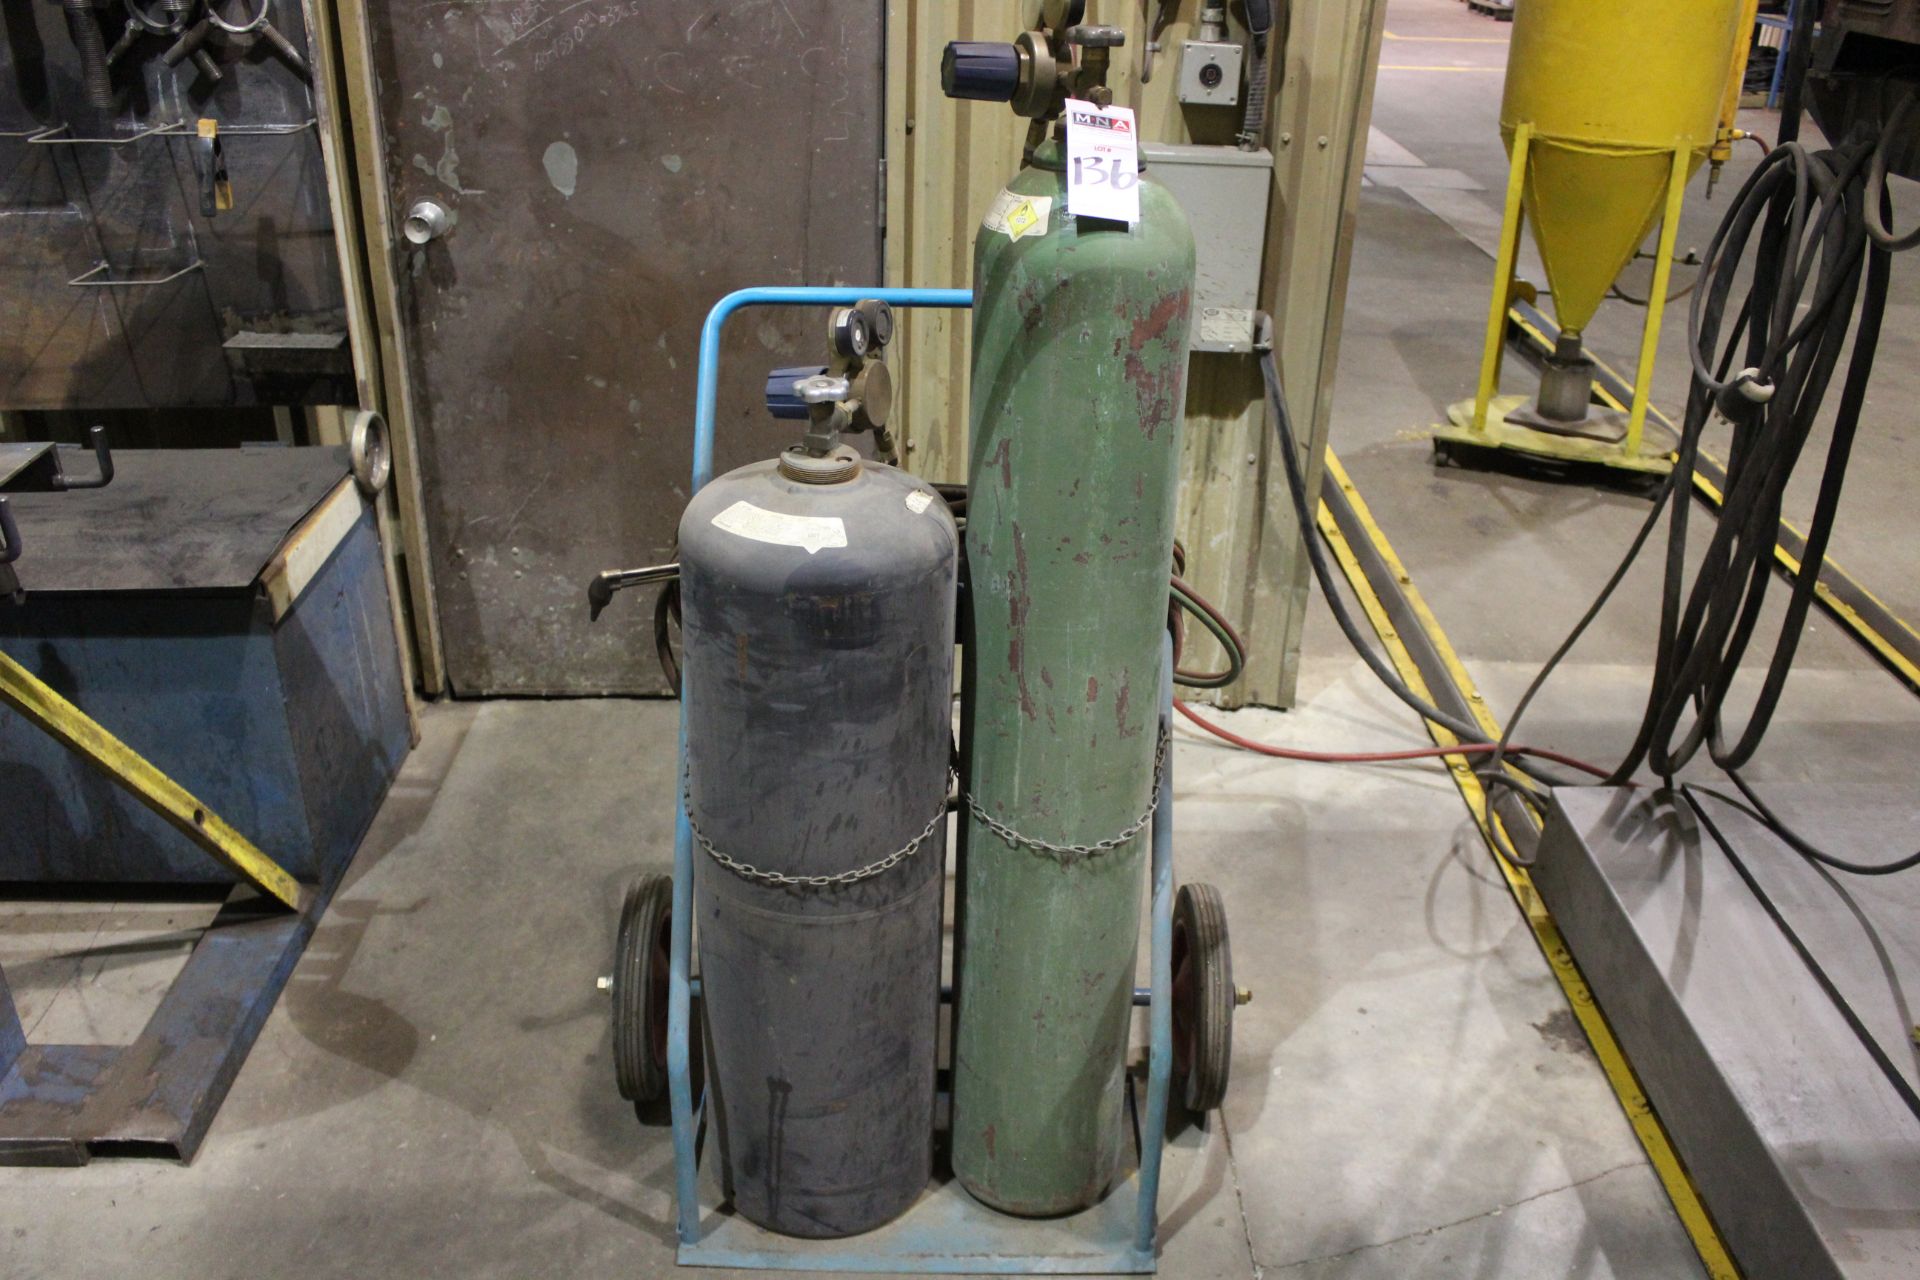 Oxy-Acetylene Welding Cart with tanks, regulator valves and gun